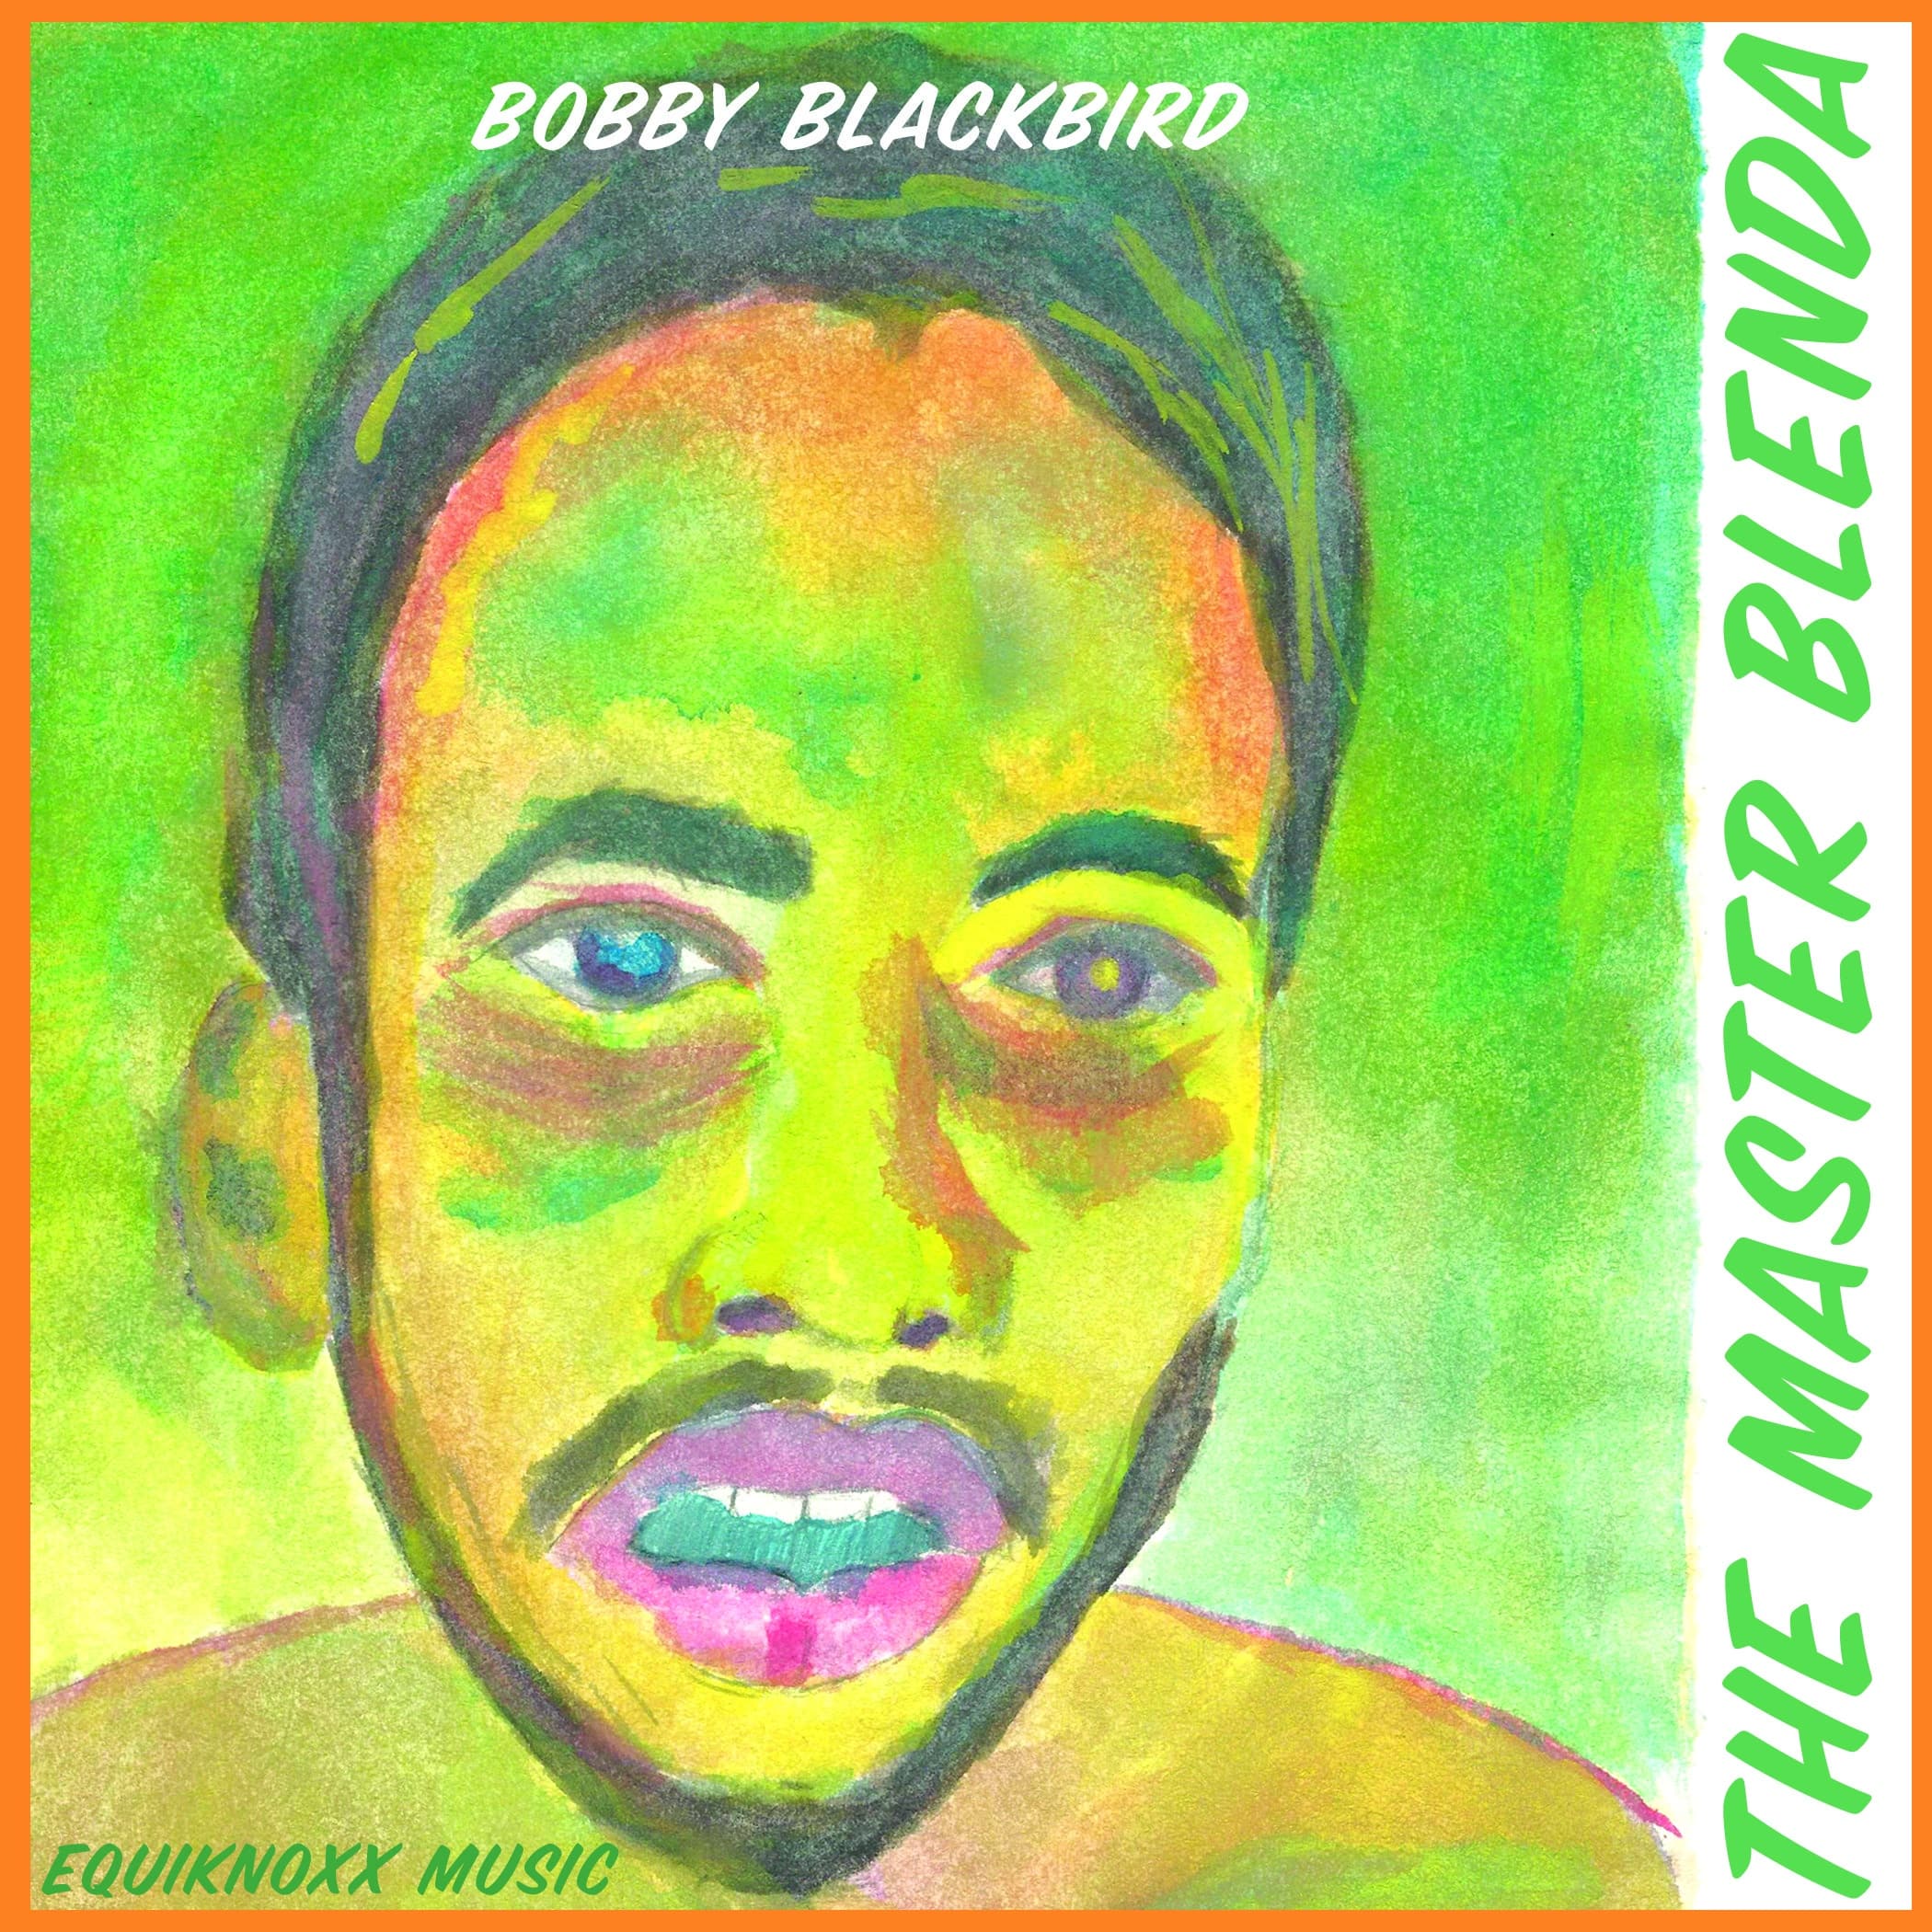 Bobby Blackbird - The Master Blenda - EM08 - EQUIKNOXX MUSIC